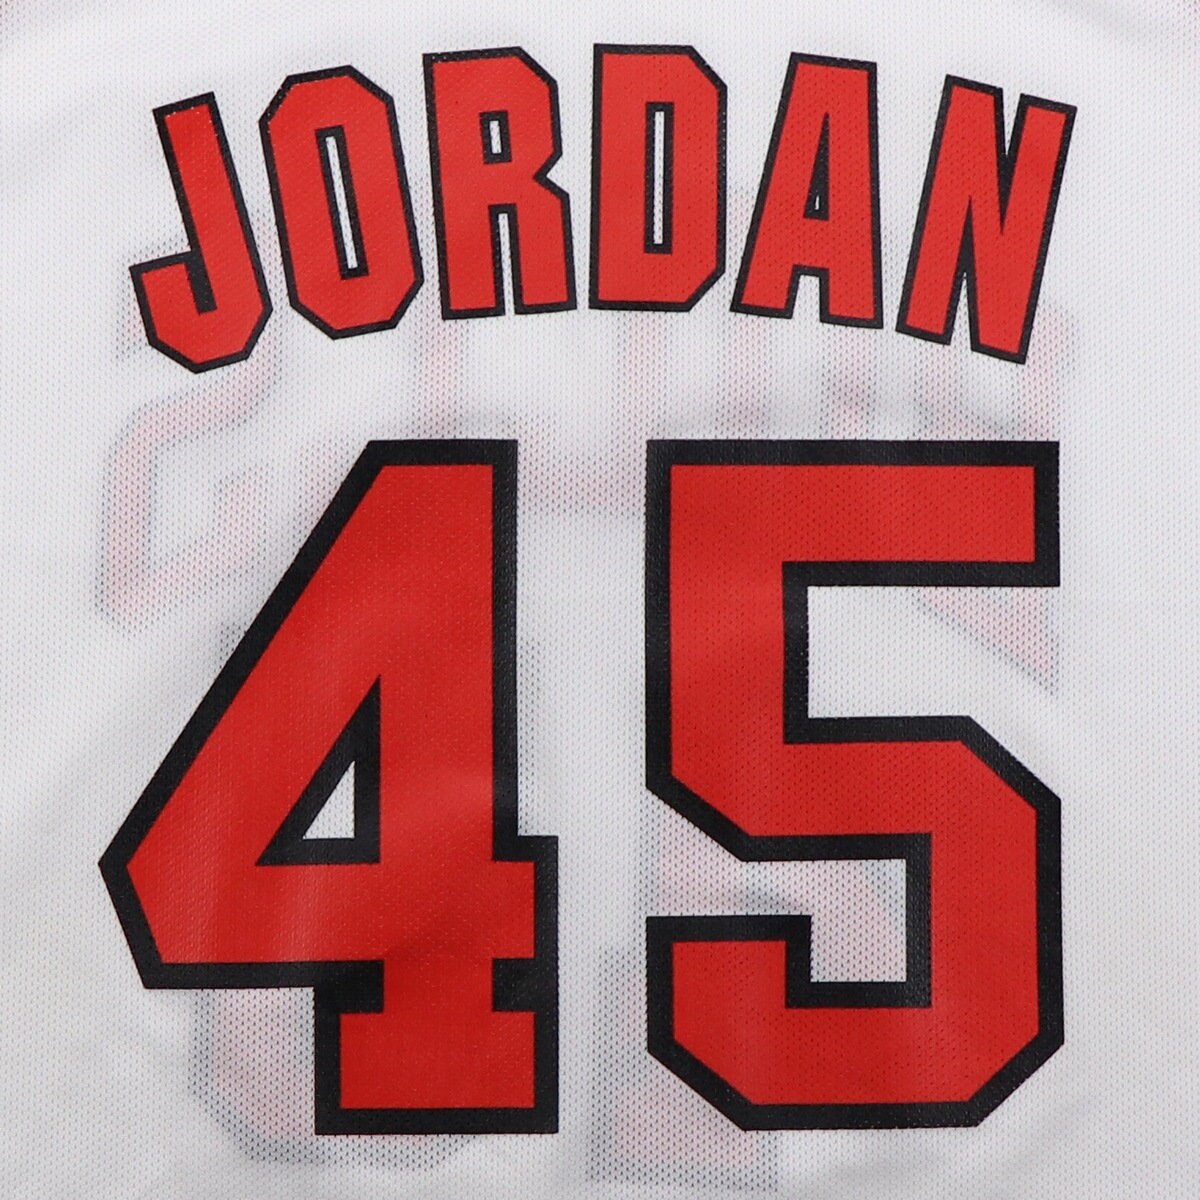 Wyco Vintage 1990s Michael Jordan Chicago Bulls 45 NBA Champion Jersey